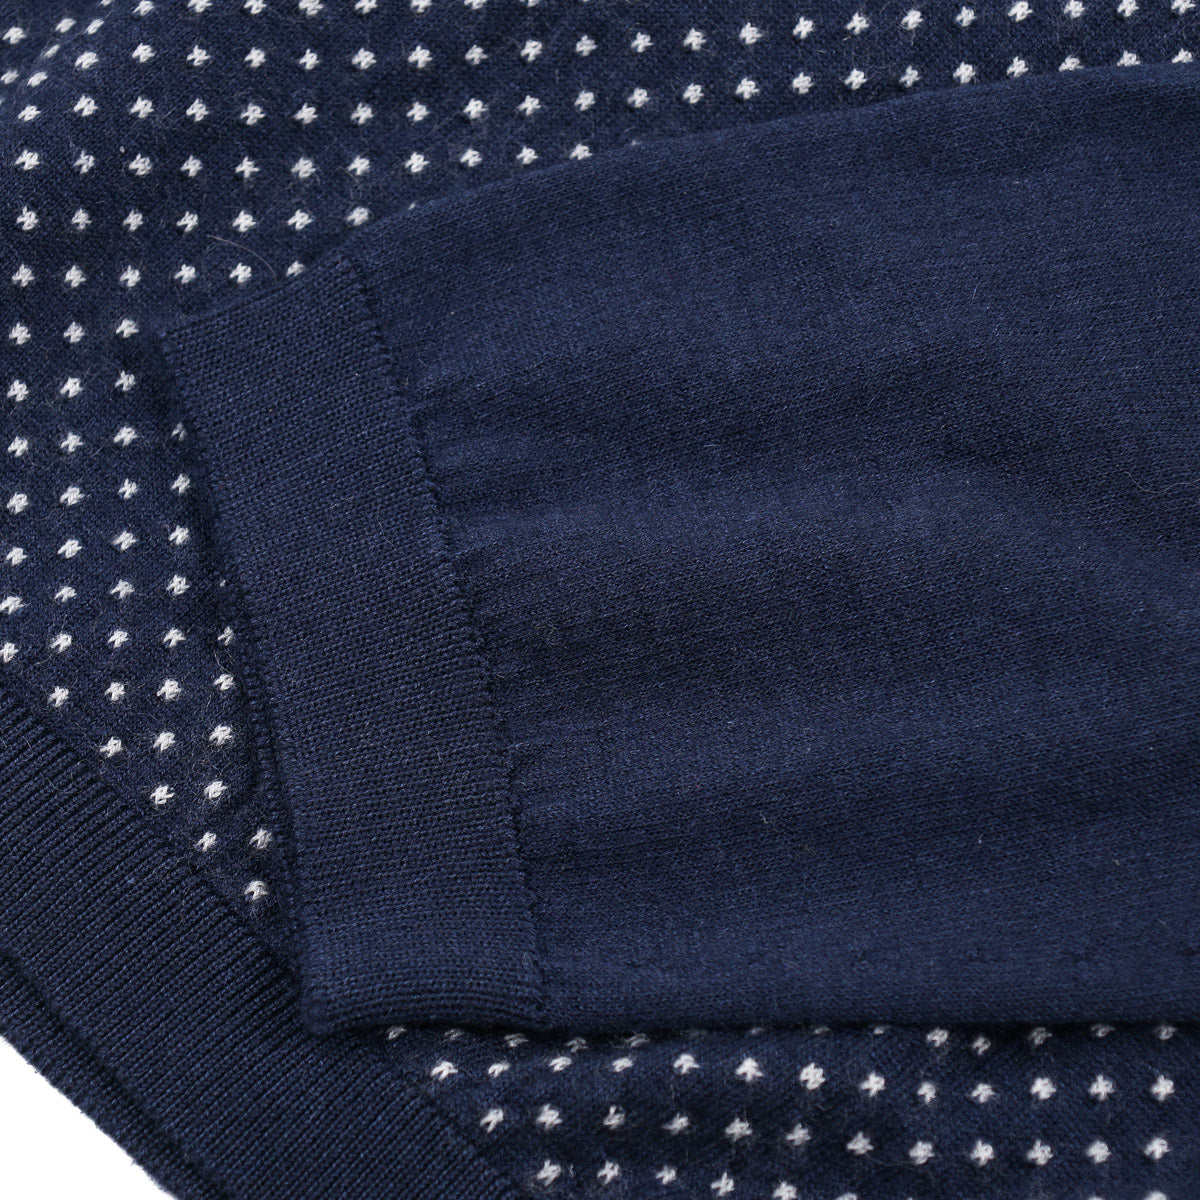 Kiton Lightweight Cashmere and Silk Sweater - Top Shelf Apparel